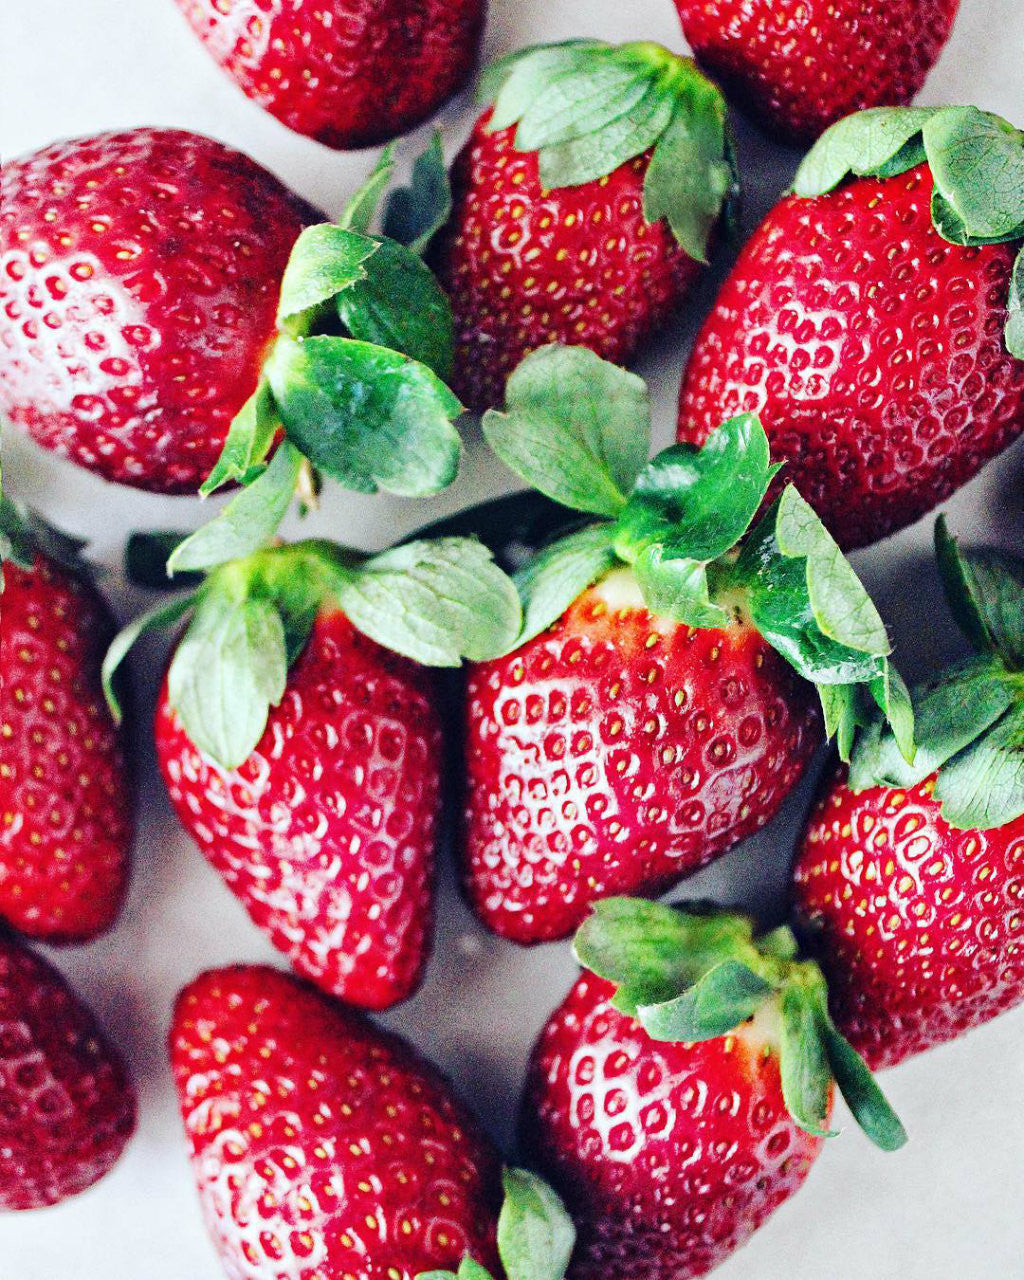 strawberries nutritional information